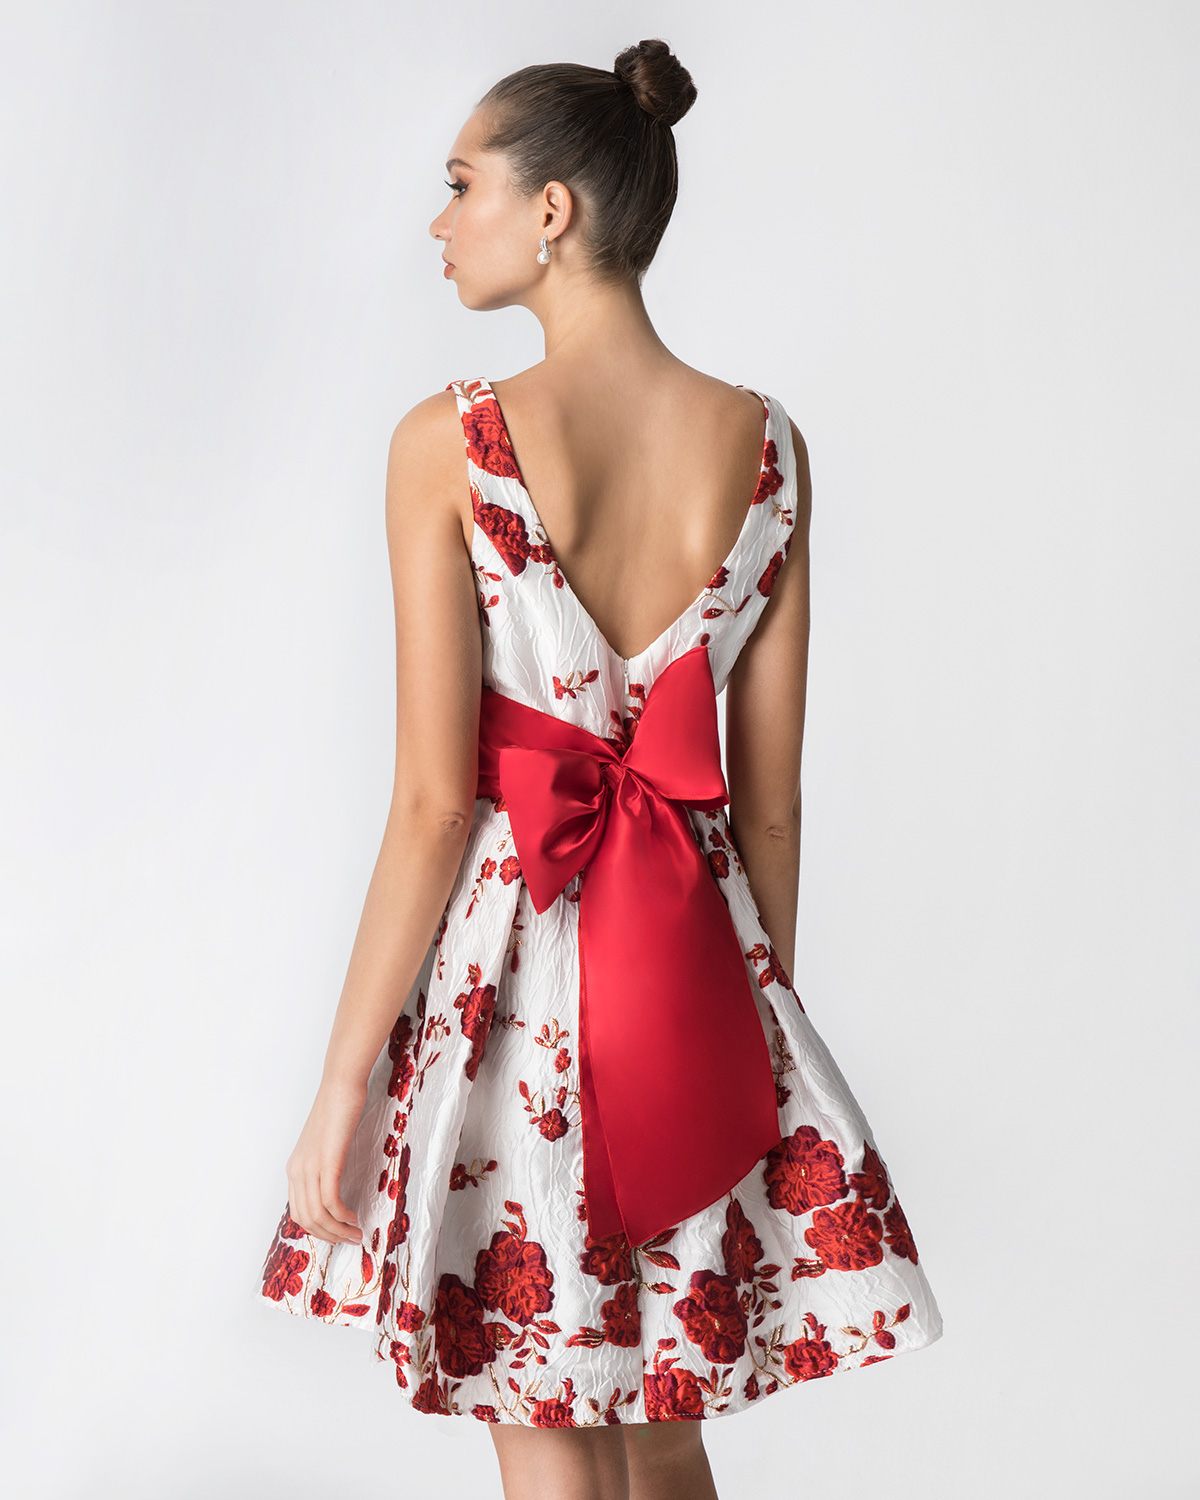 Коктейльные платья / Short cocktail printed dress with a big bow on the back